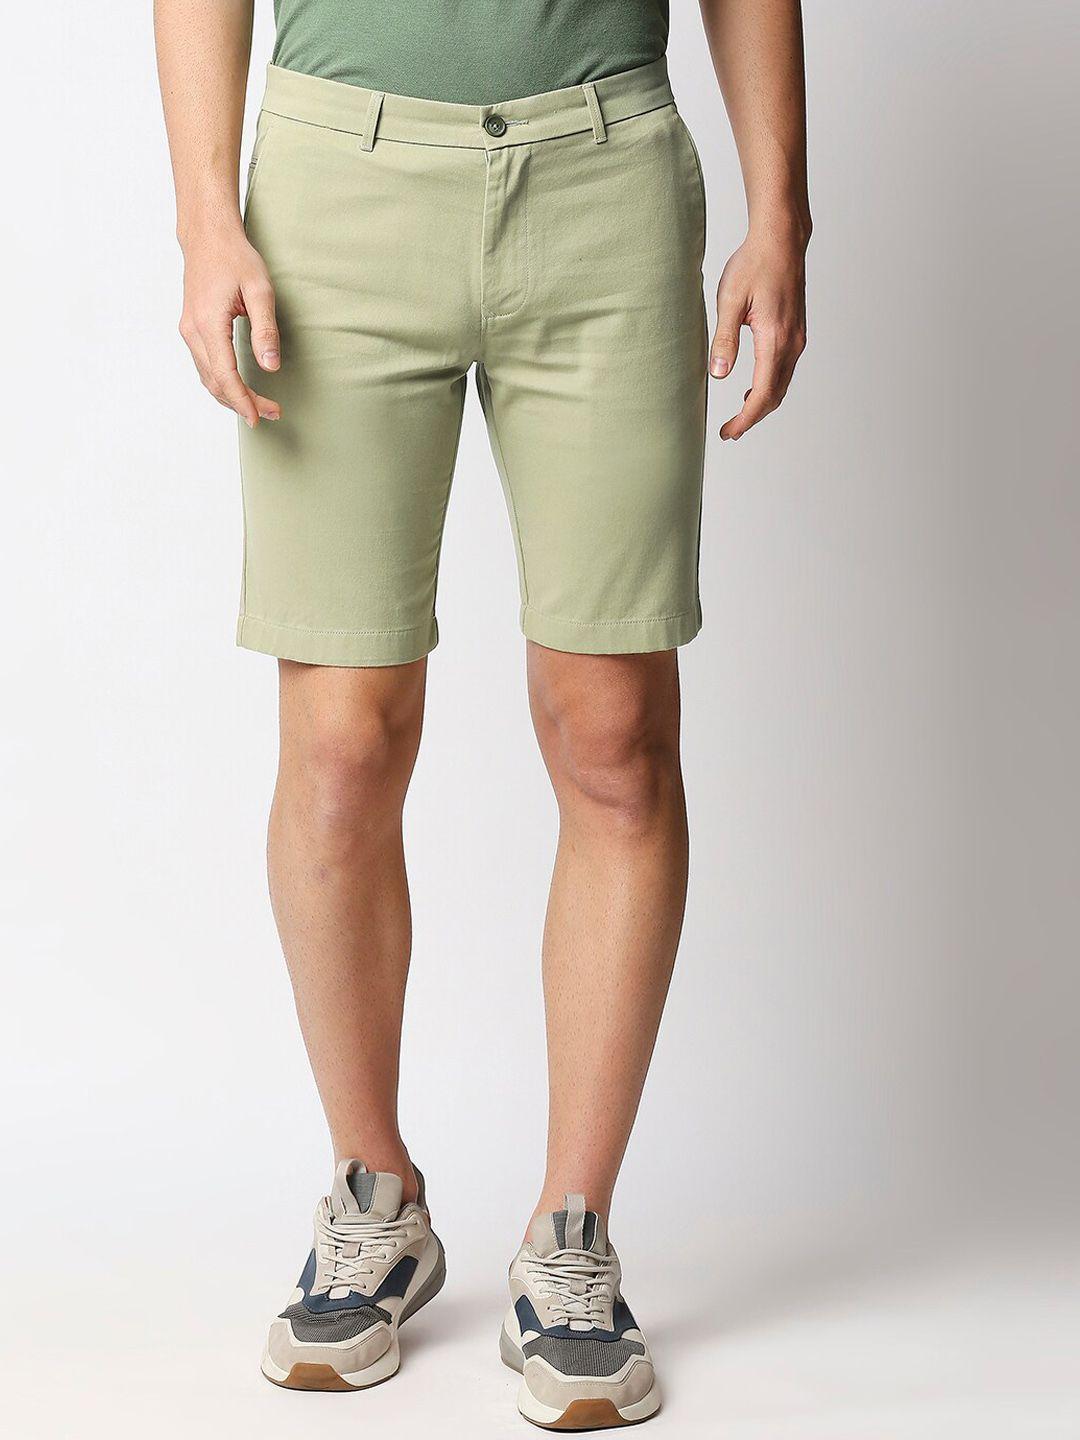 basics men sage green regular fit solid cotton shorts